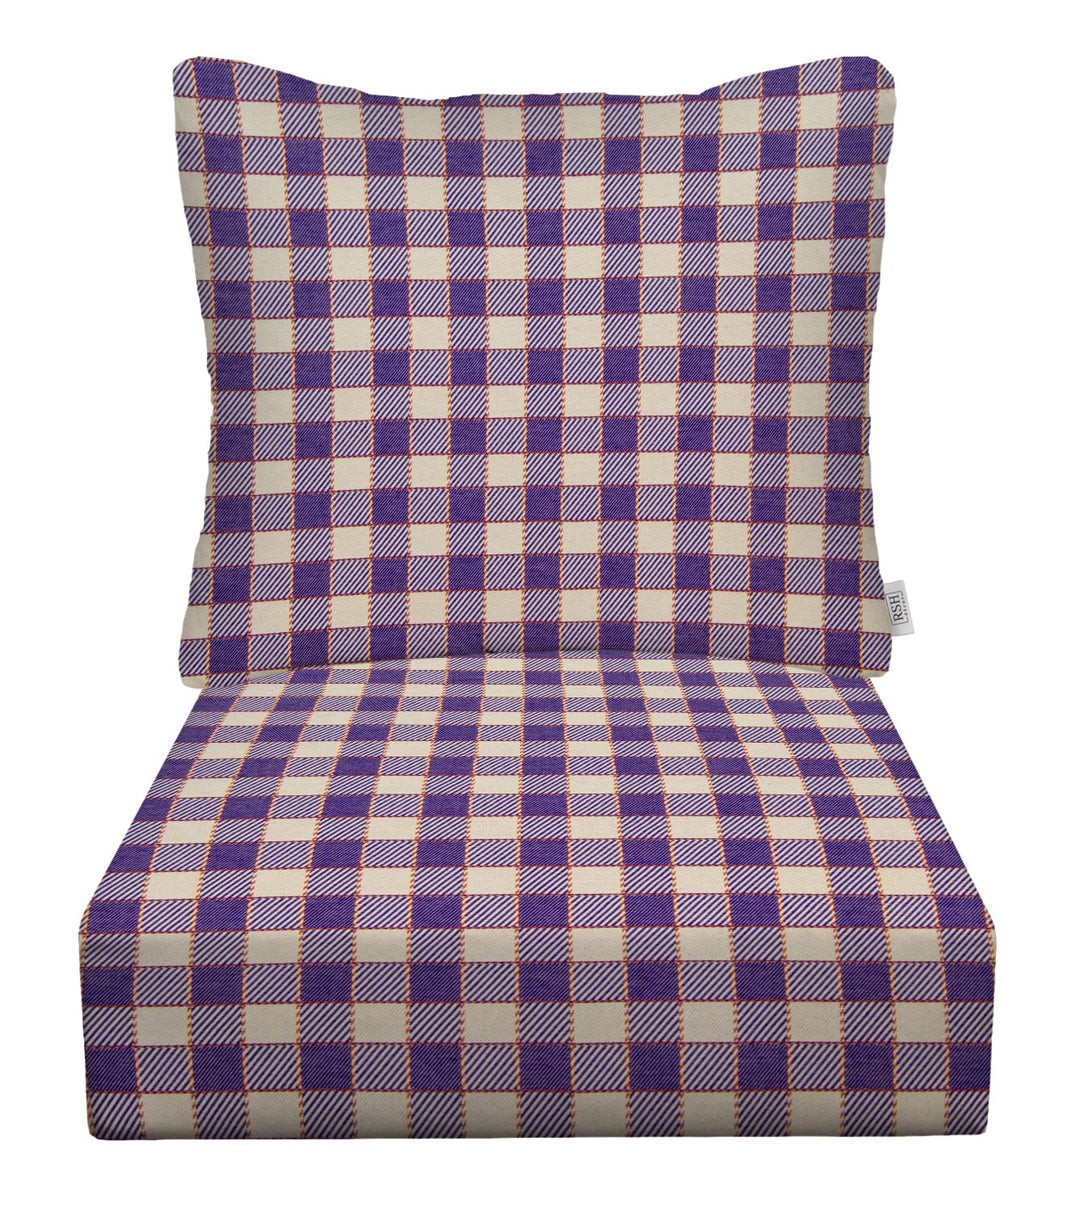 Deep Seating Pillow Back Chair Cushion Set, 23 x 24 x 5 Seat